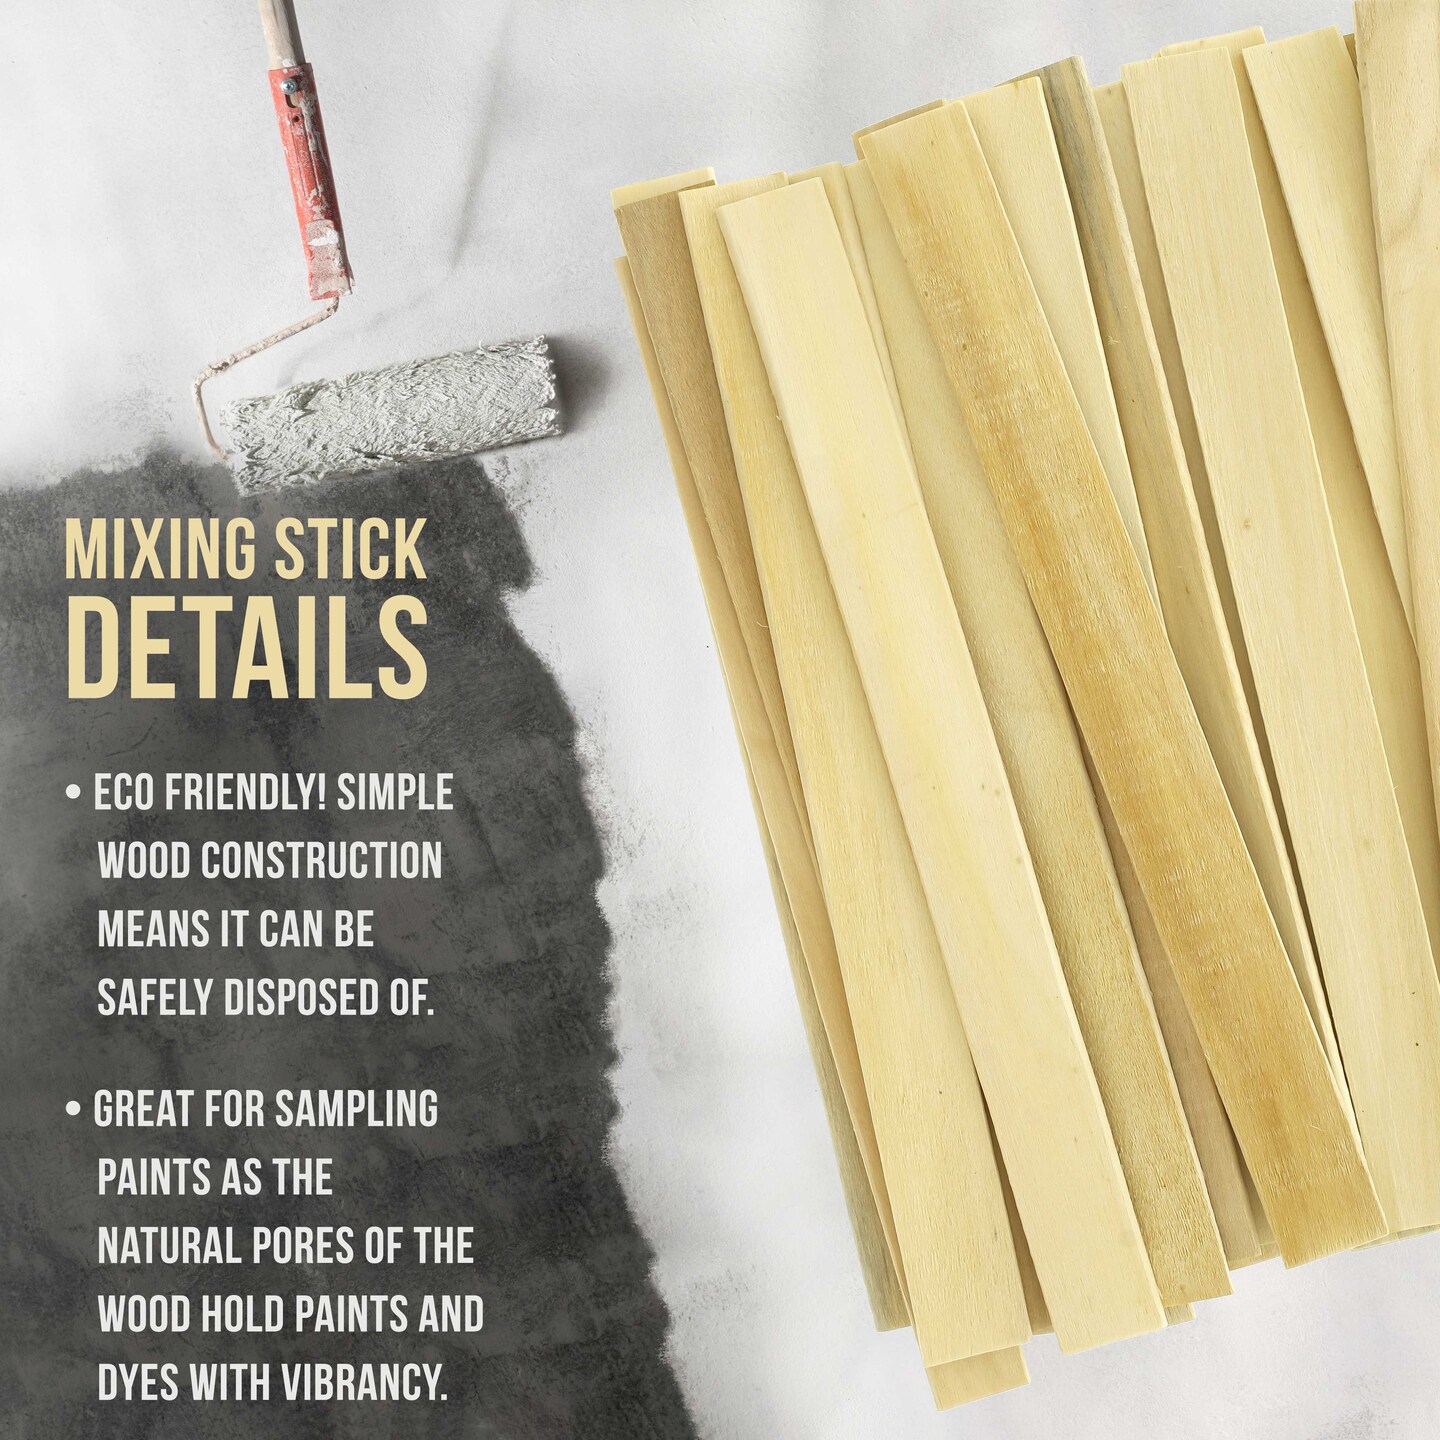  12 Inch Wood Paint Stir Sticks, 20 Pack of Paint